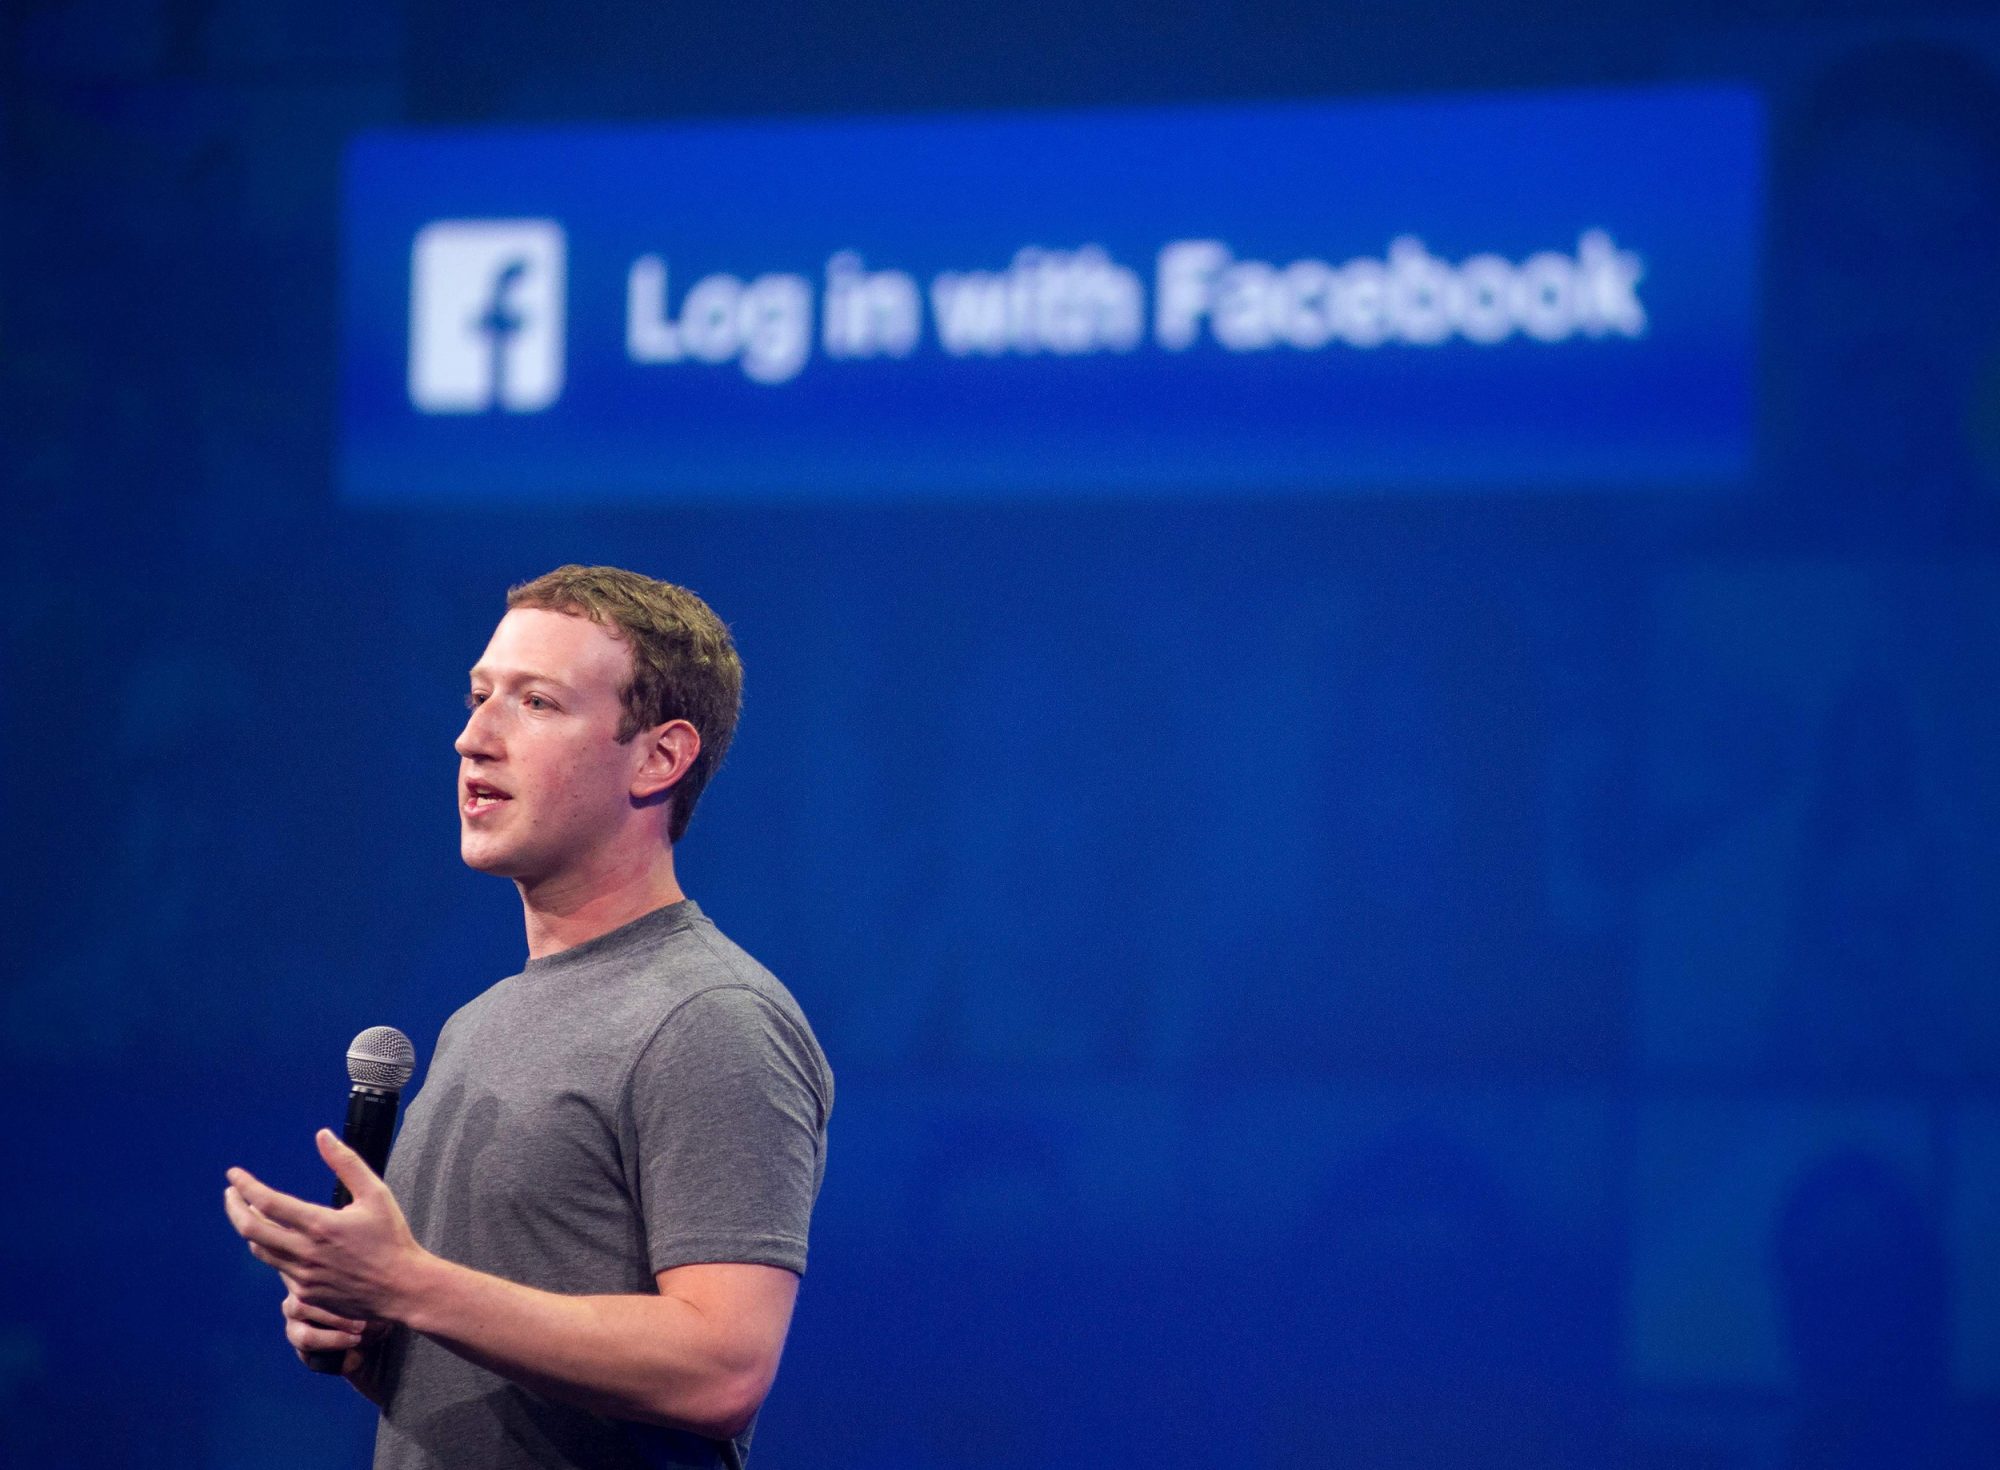 Facebook spent over $13 bln on safety, security